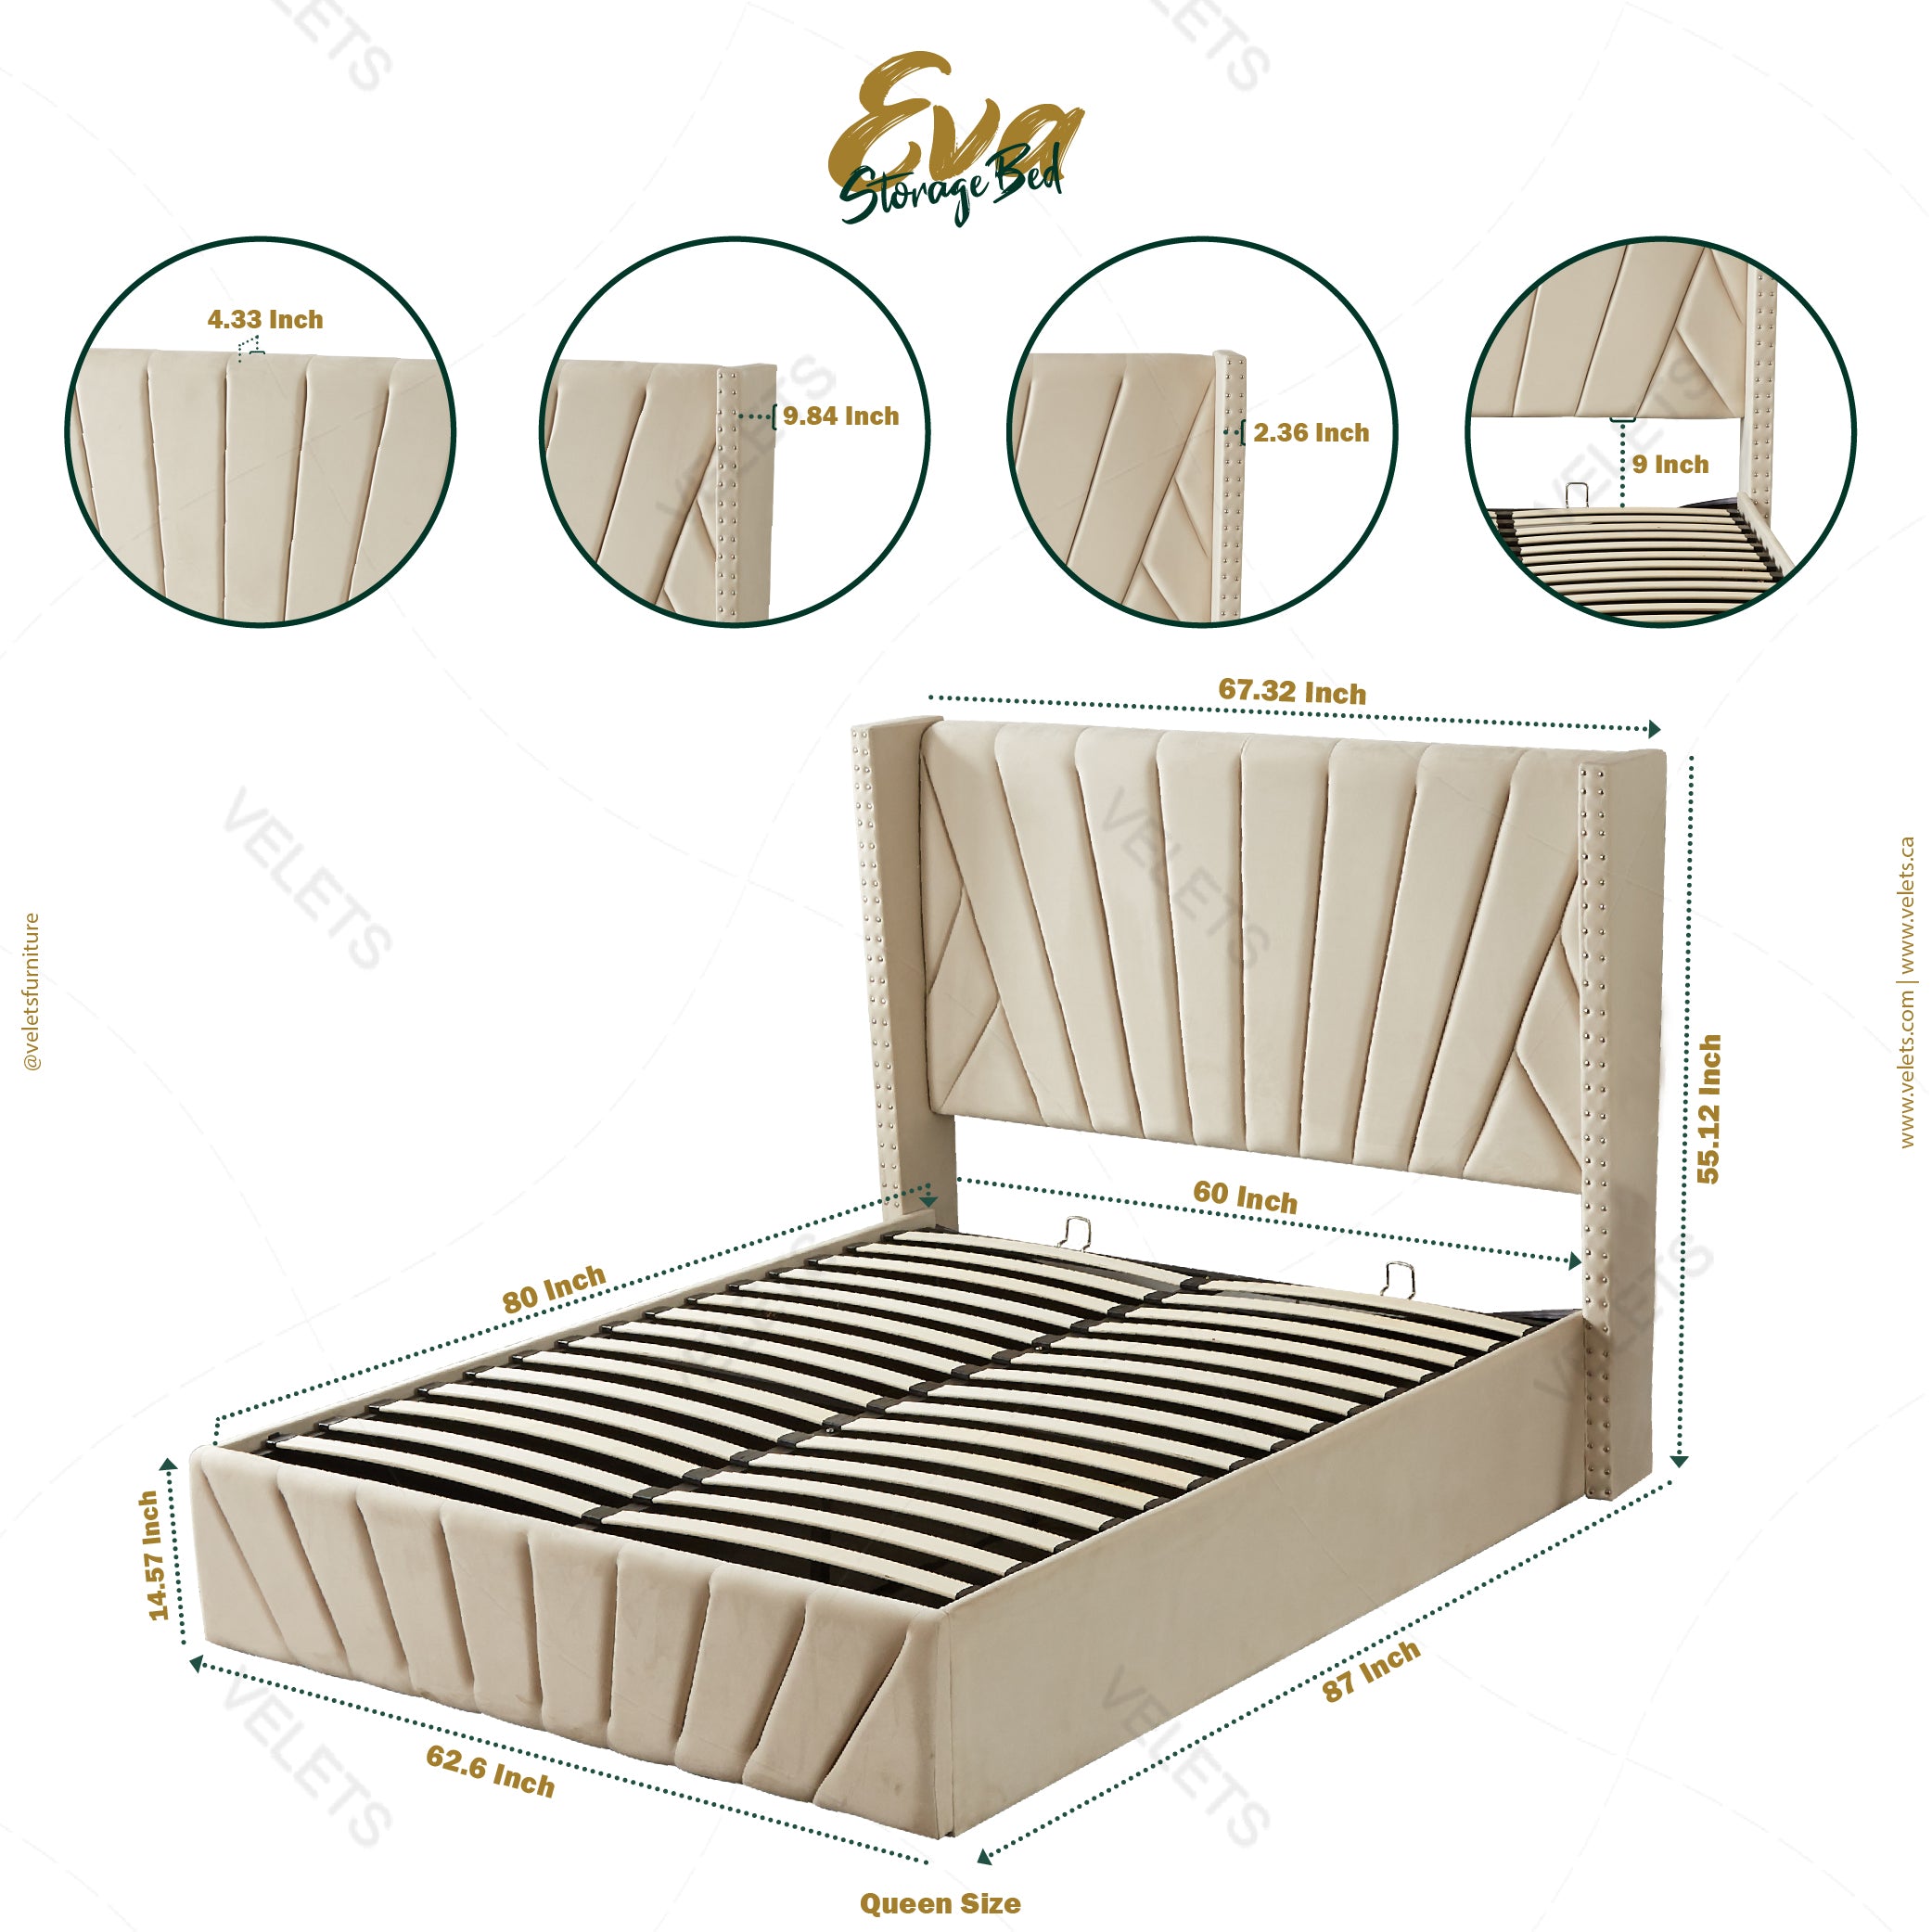 Velets Eva Contemporary Mid-Century Soft Padded Upholstered Platform Storage Bed Frame with Hydraulic Gas Lift Storage - Solid Wood Frame, Wood Slat System & Smart Hydraulic Under-Bed Storage - Ivory